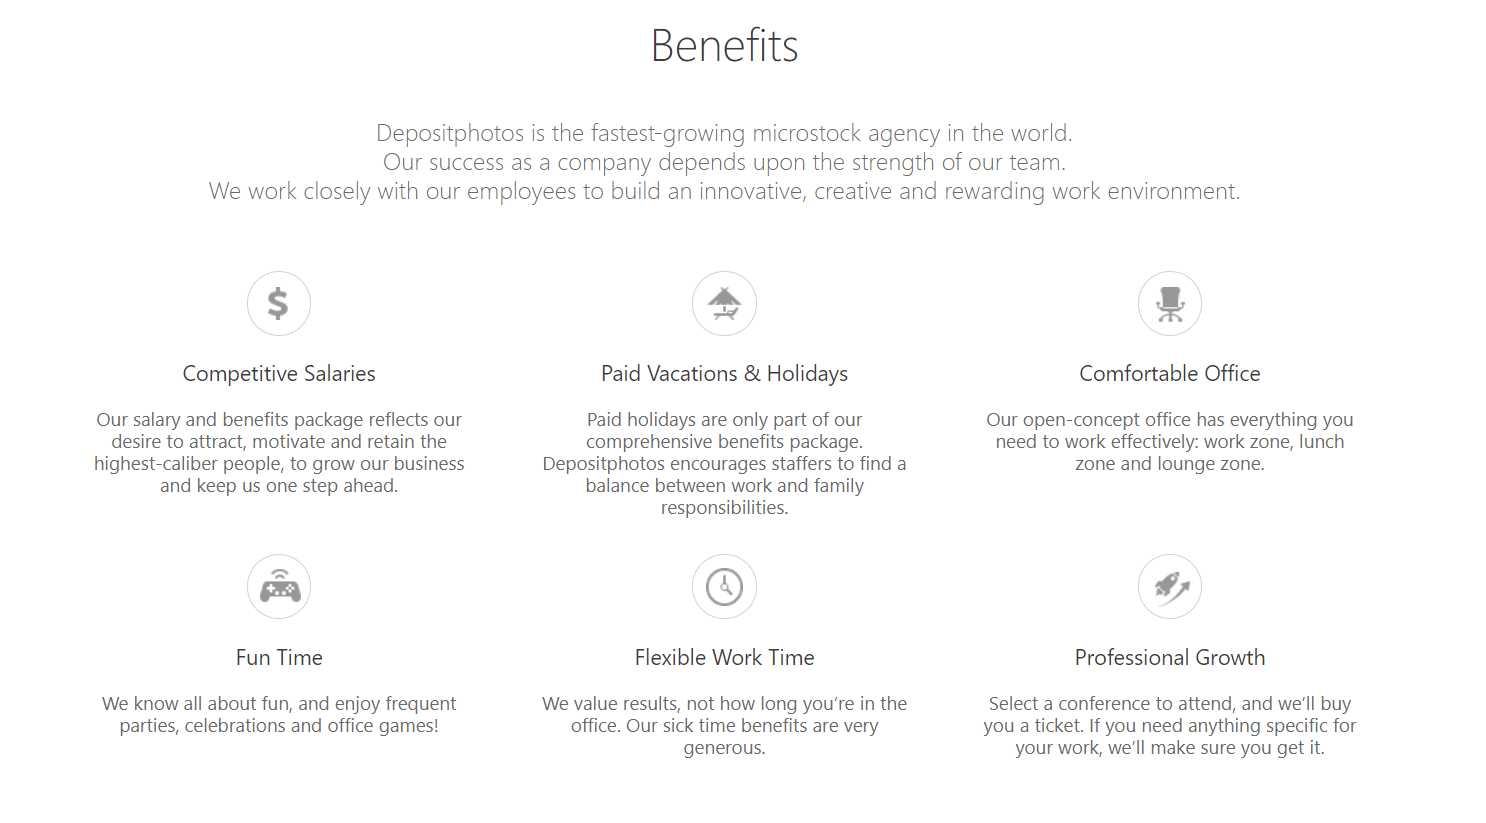 Some of the Depositphotos' Employee Benefits